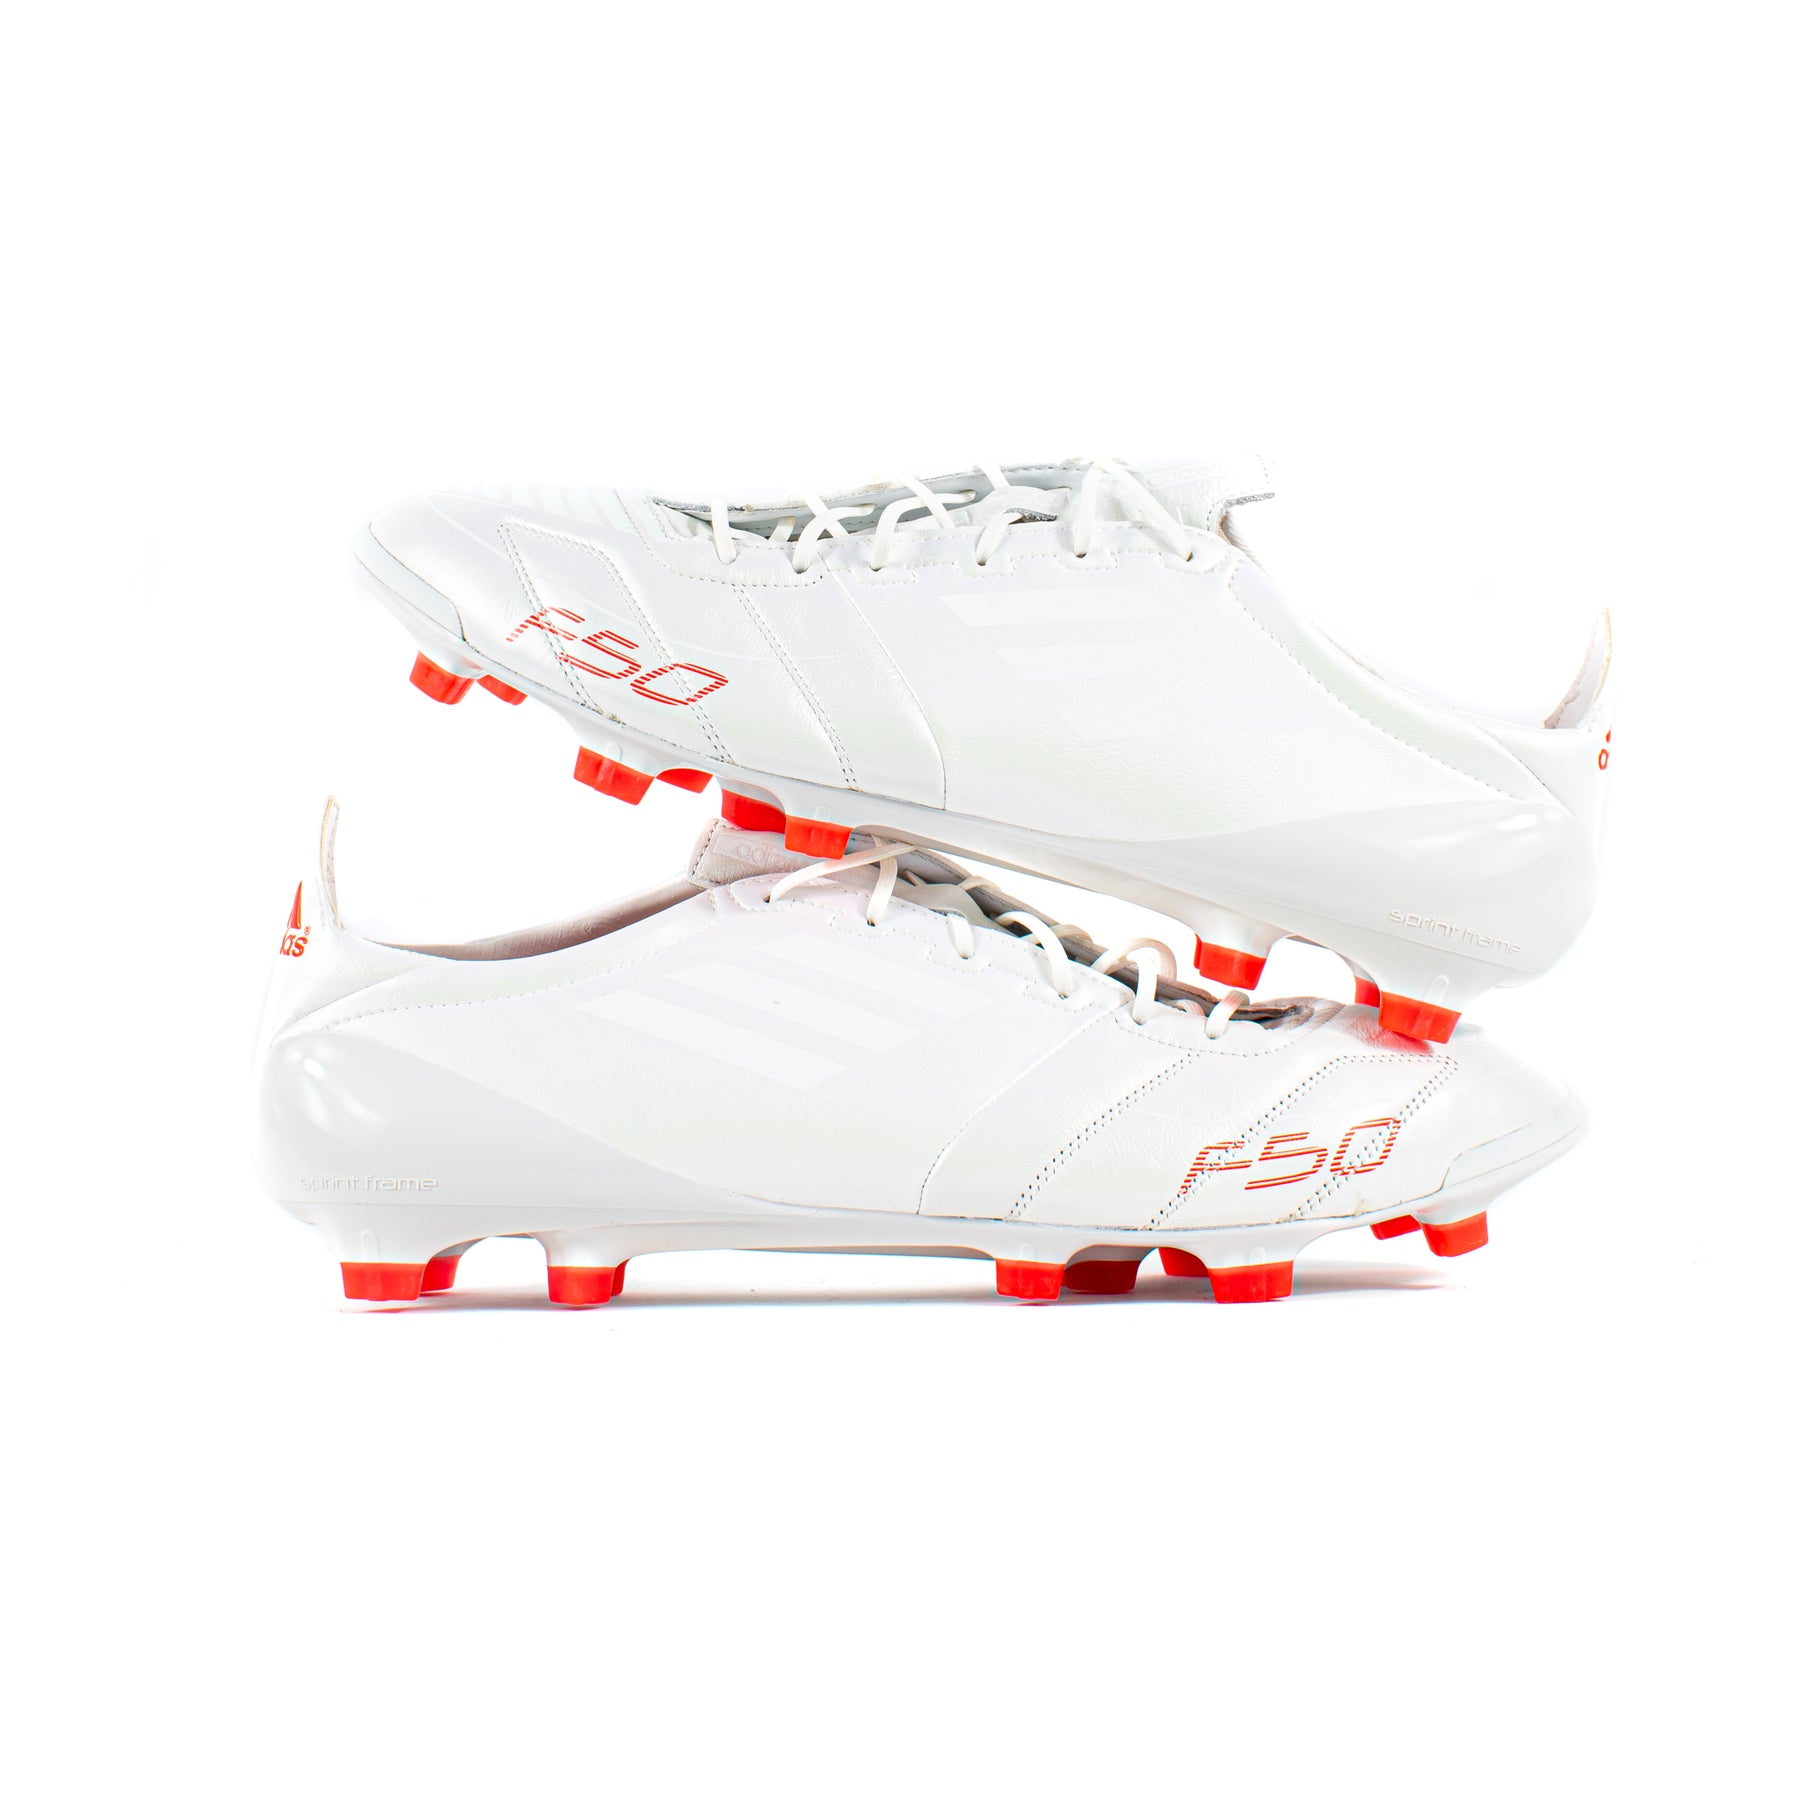 Heredero suelo virtud Adidas F50 Adizero Leather Whiteout FG – Classic Soccer Cleats